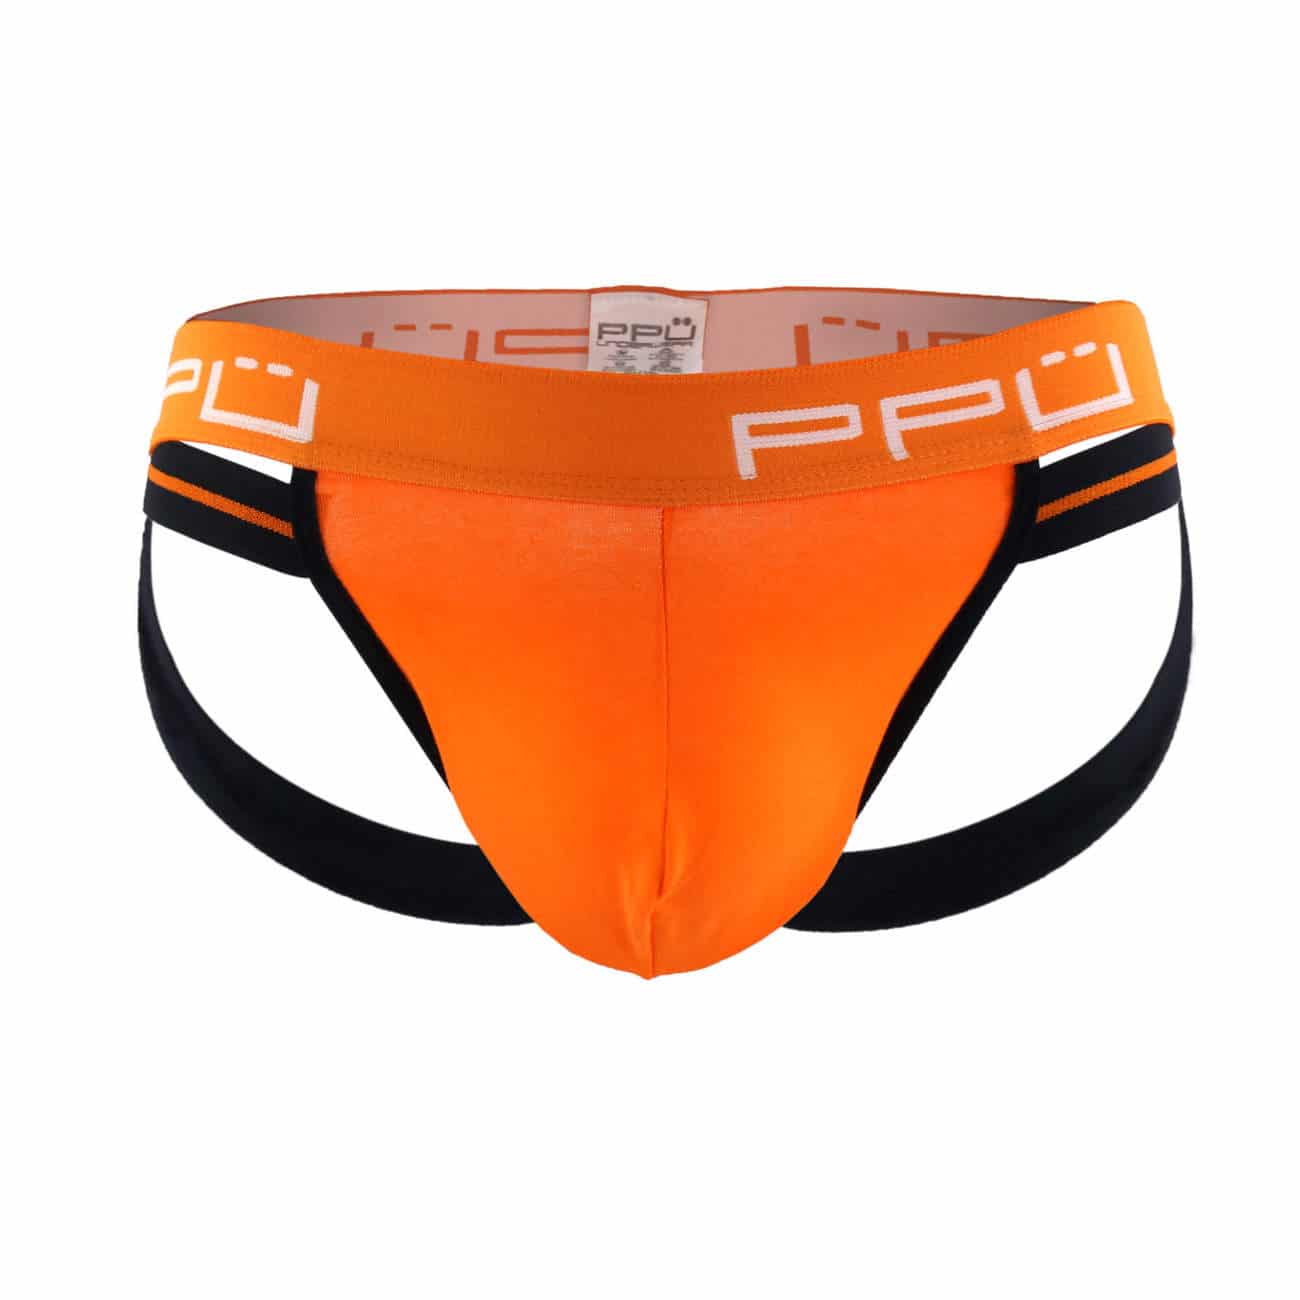 PPU Underwear Men's Elastics Jockstrap | Shop MensUnderwear.io